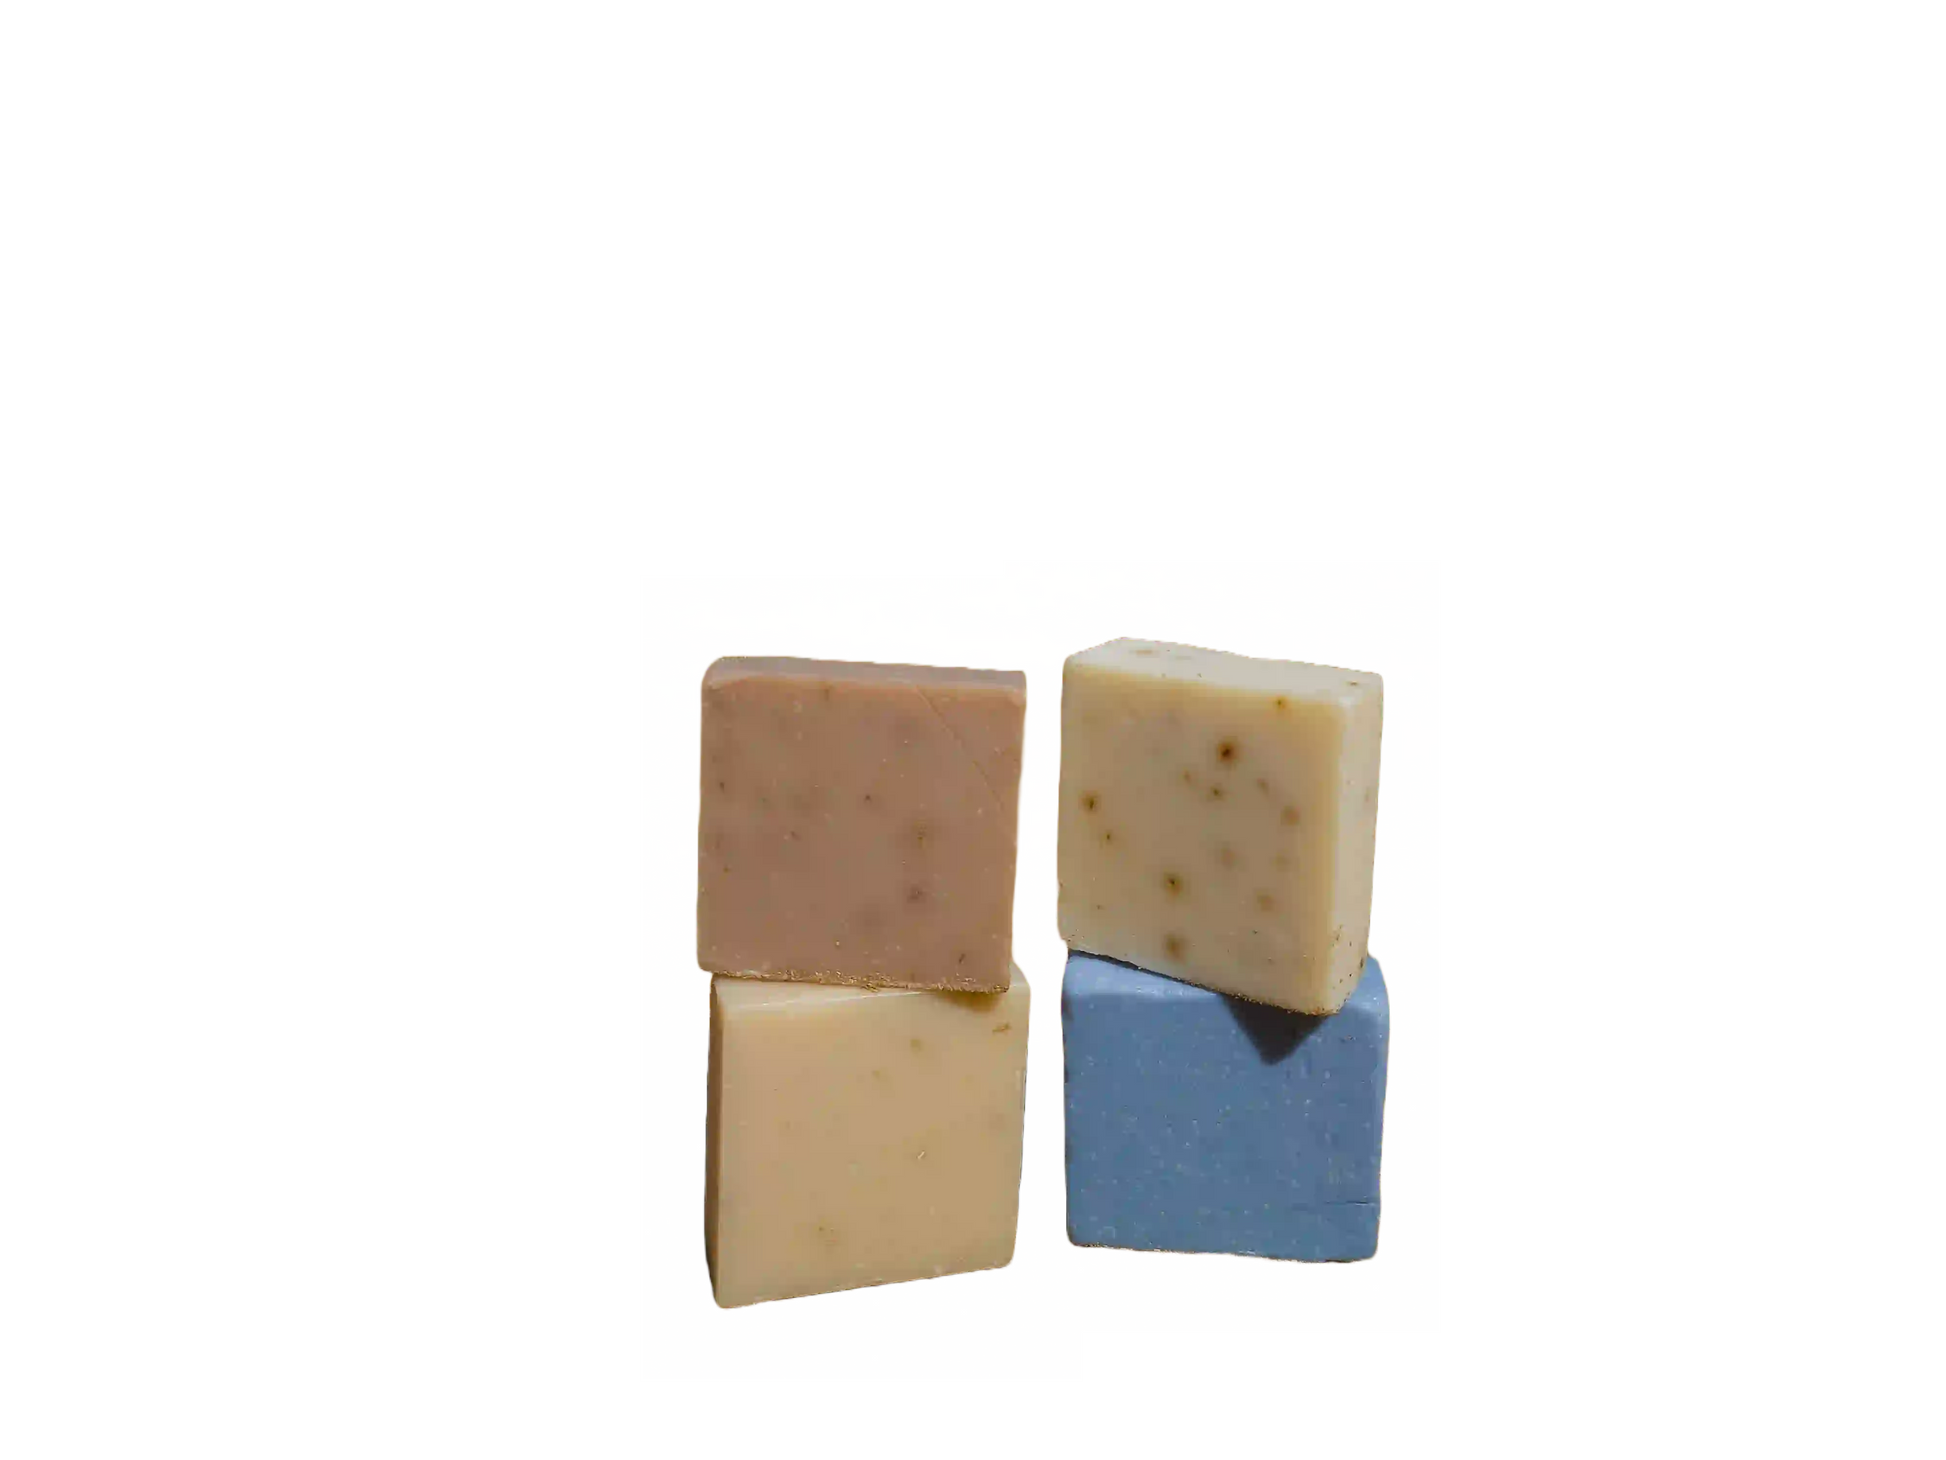 Organic Soap Bars